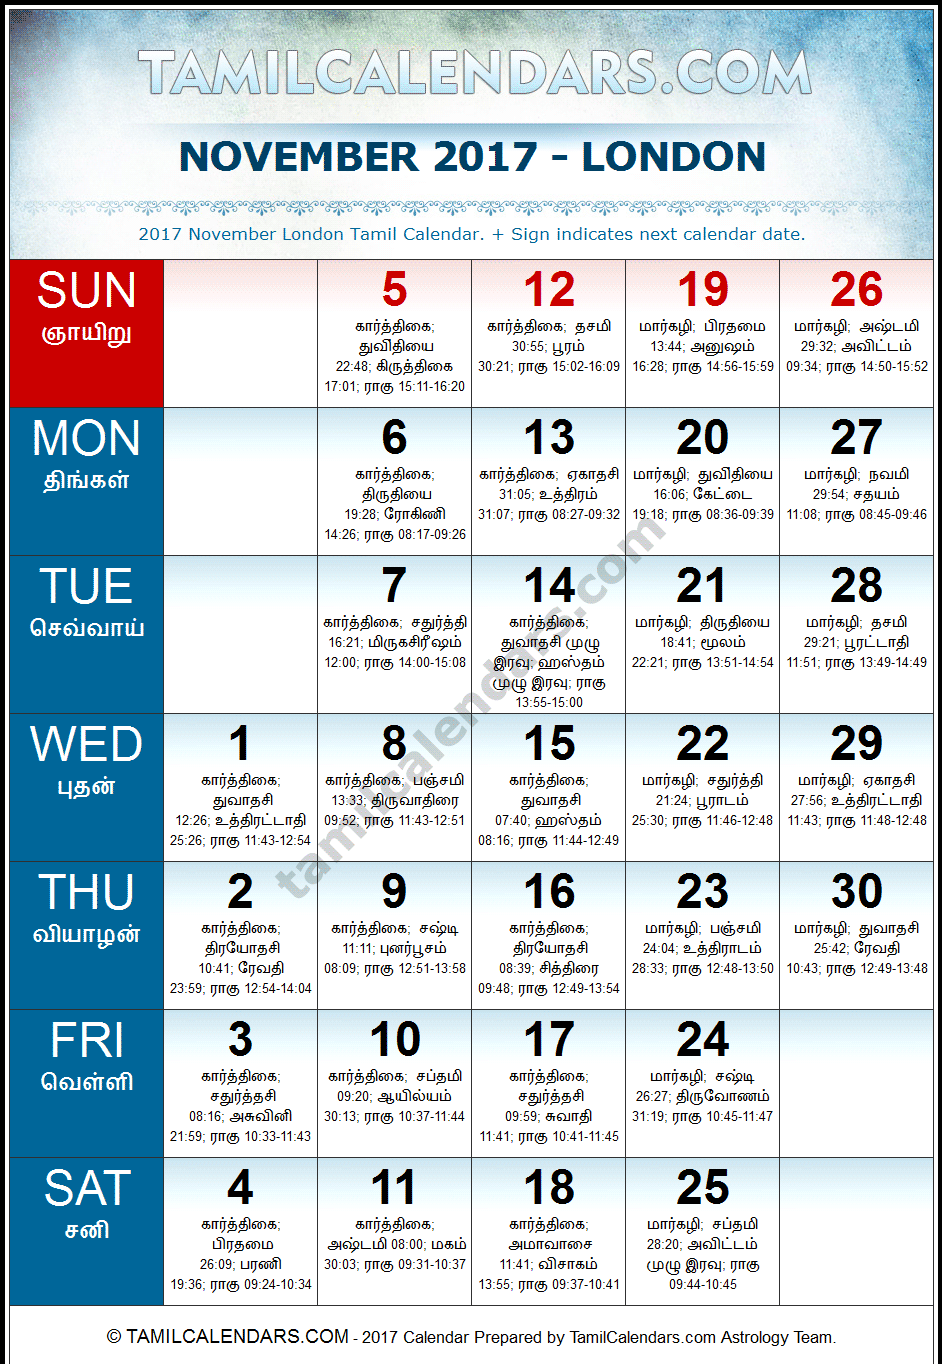 November 2017 Tamil Calendar for London, UK